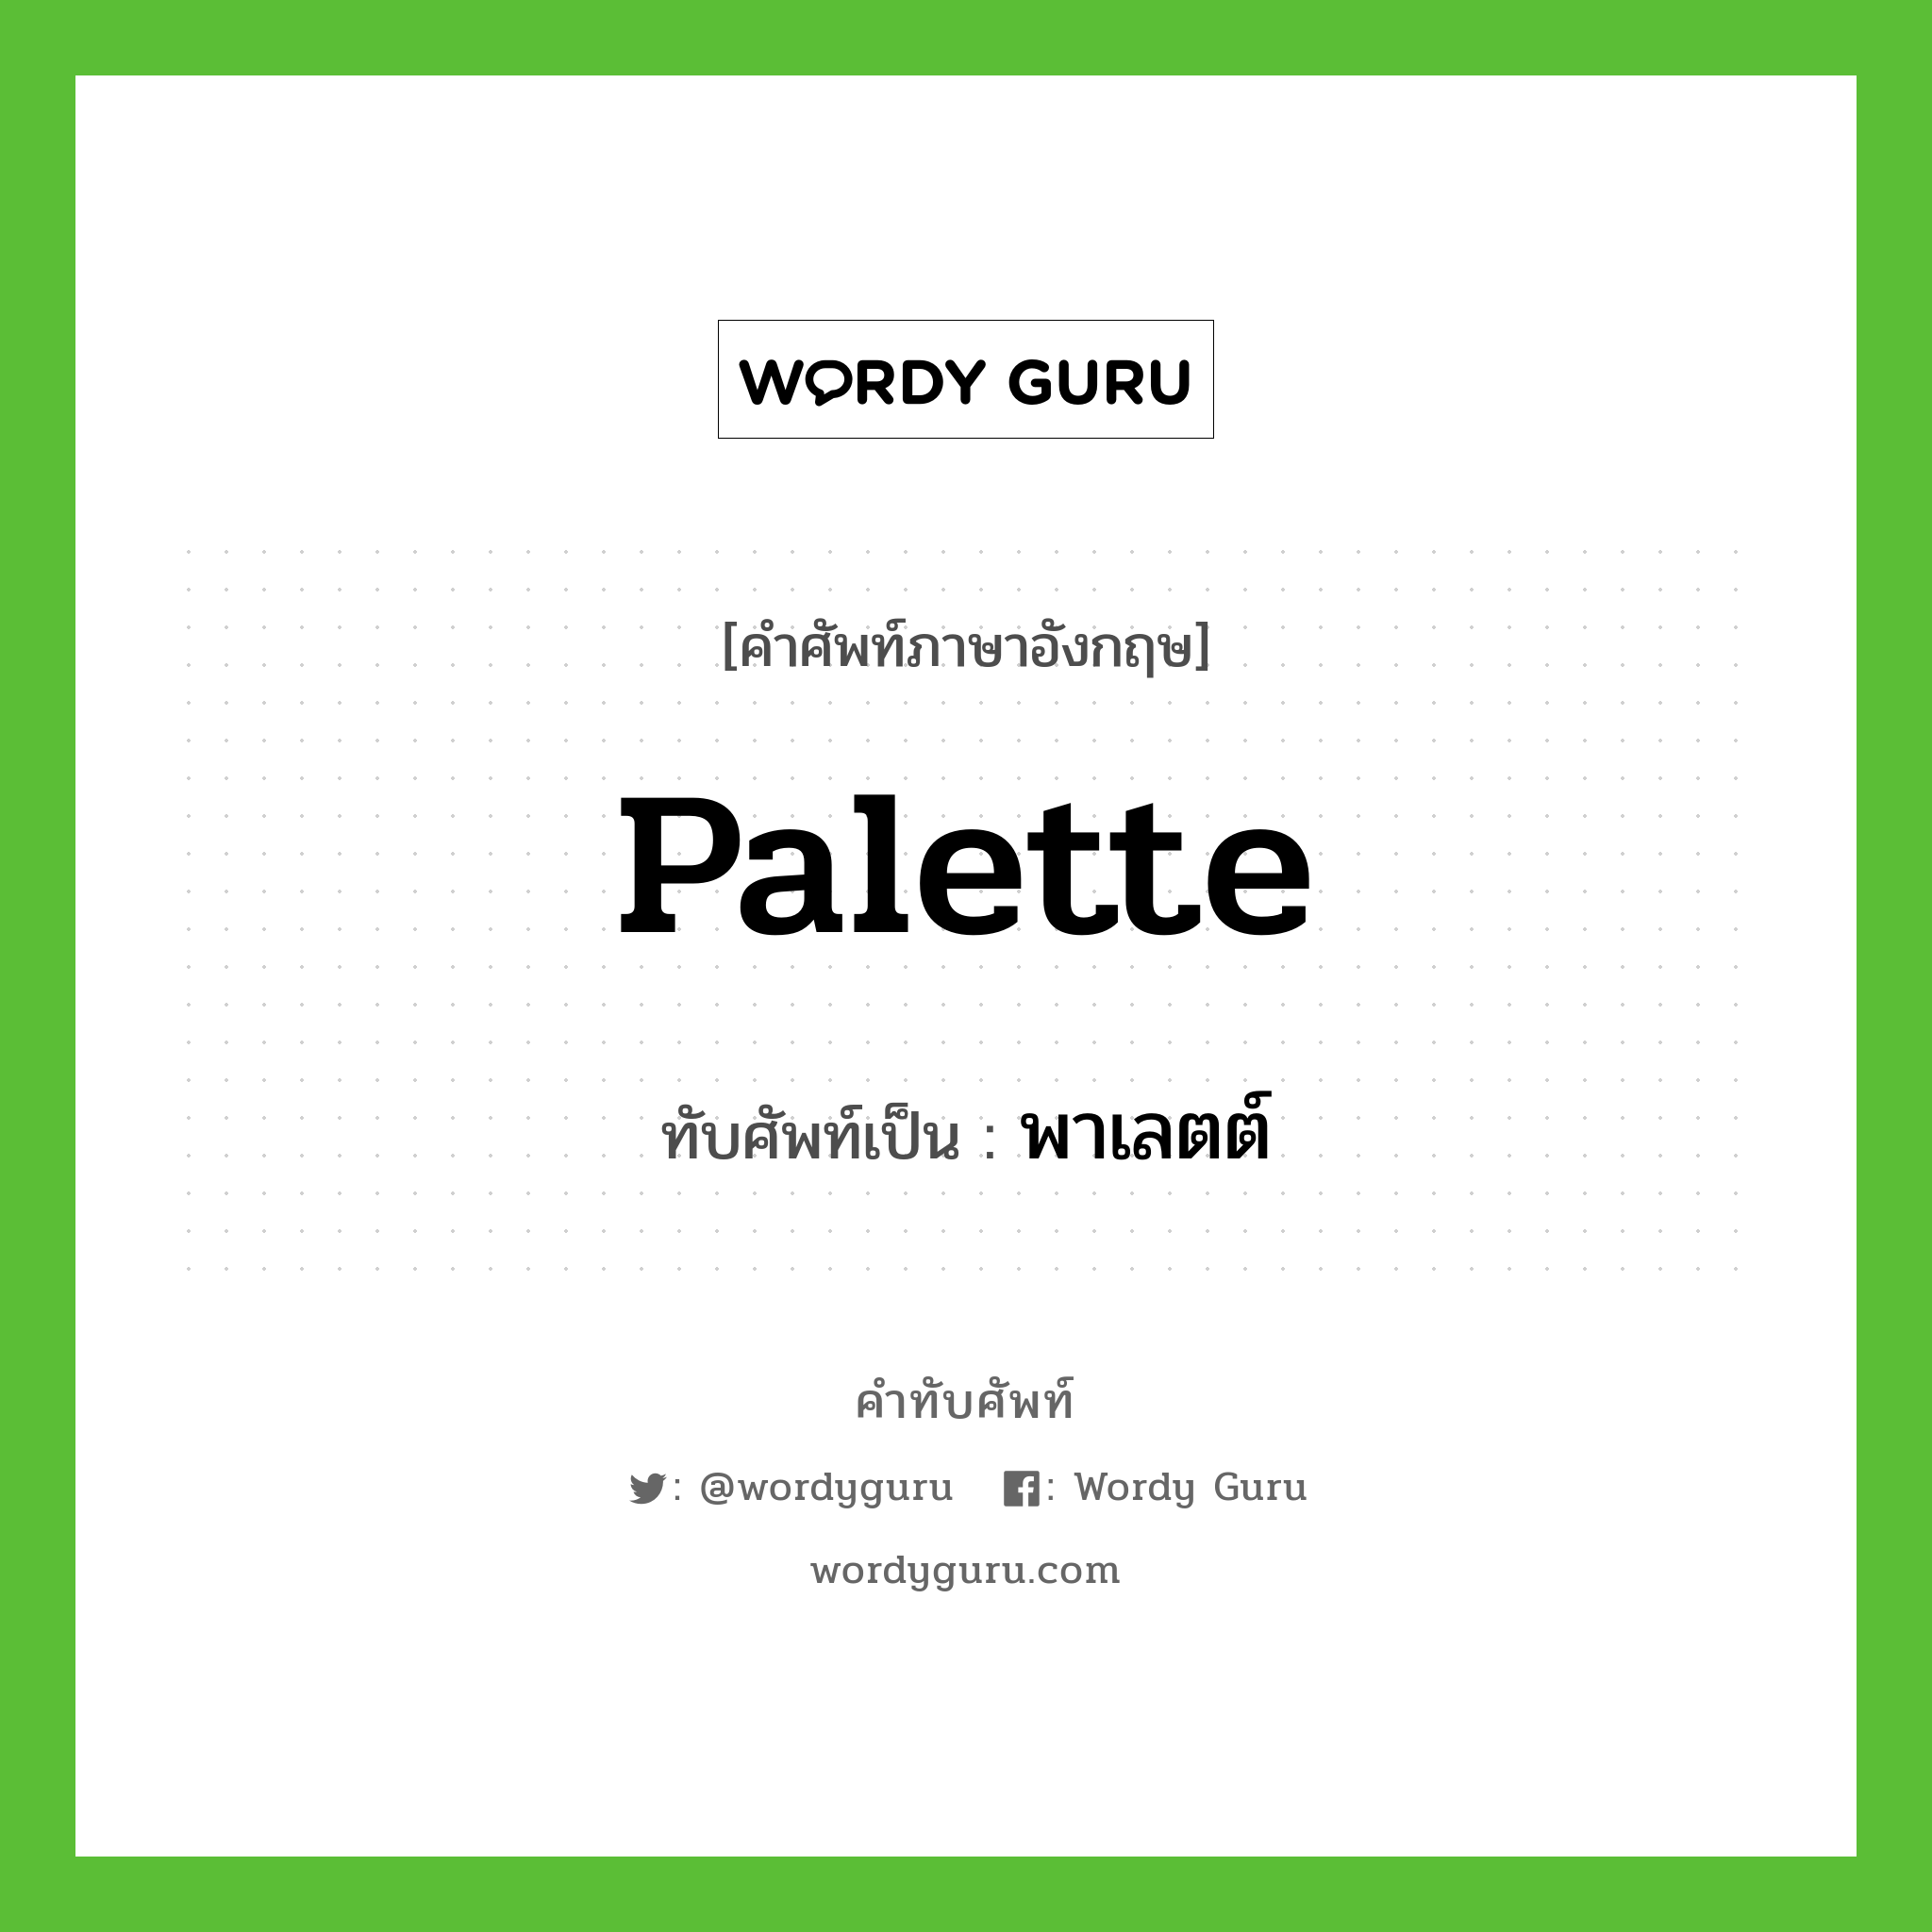 palette เขียนเป็นคำไทยว่าอะไร?, คำศัพท์ภาษาอังกฤษ palette ทับศัพท์เป็น พาเลตต์